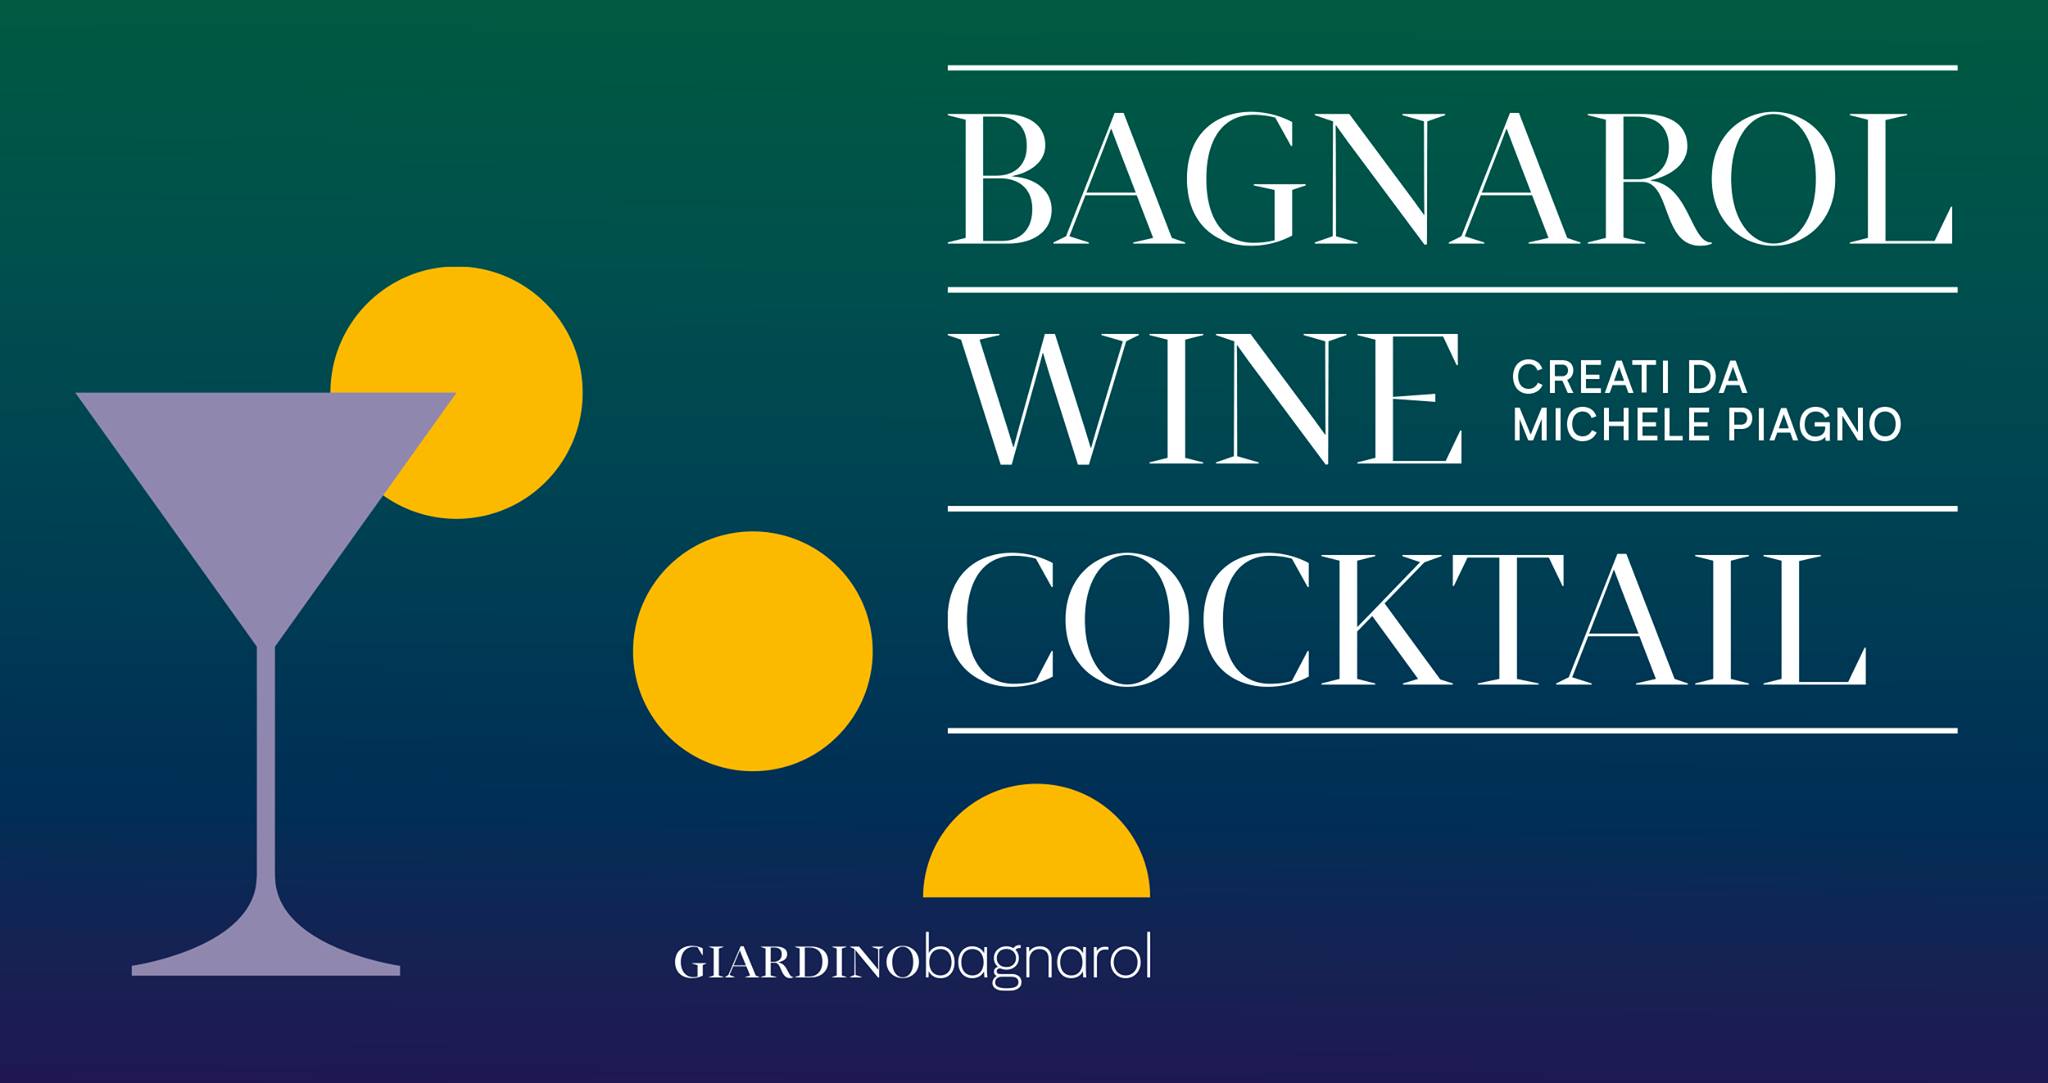 Bagnarol Wine Cocktail - EventiFVG.it